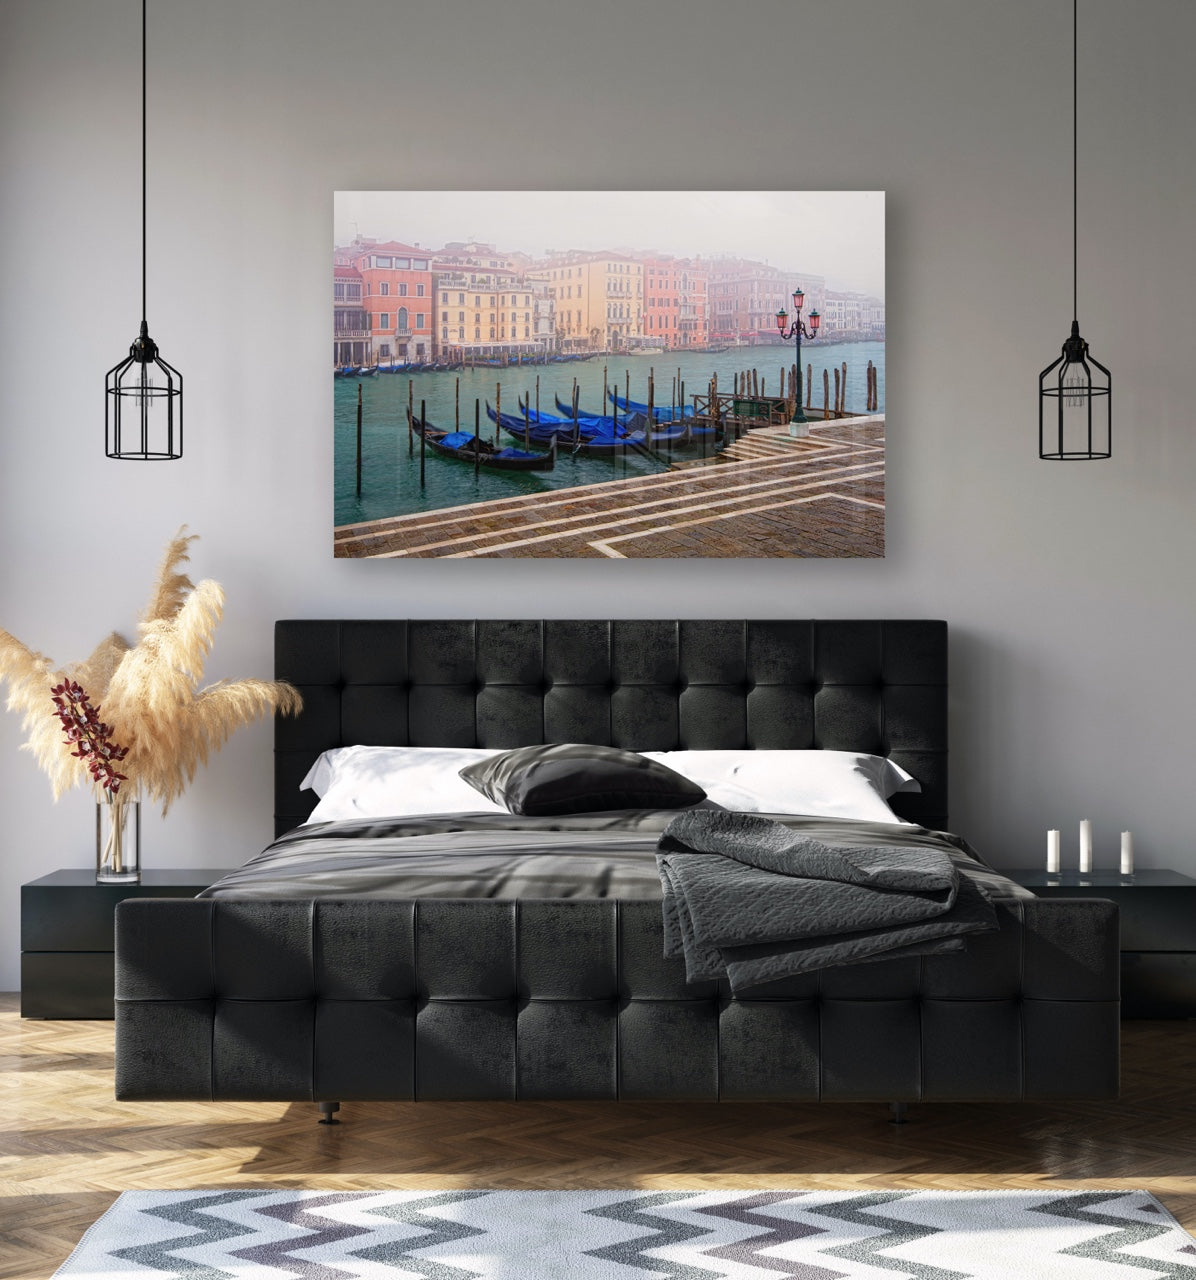 Wall art over bed of gondolas in Venice Italy